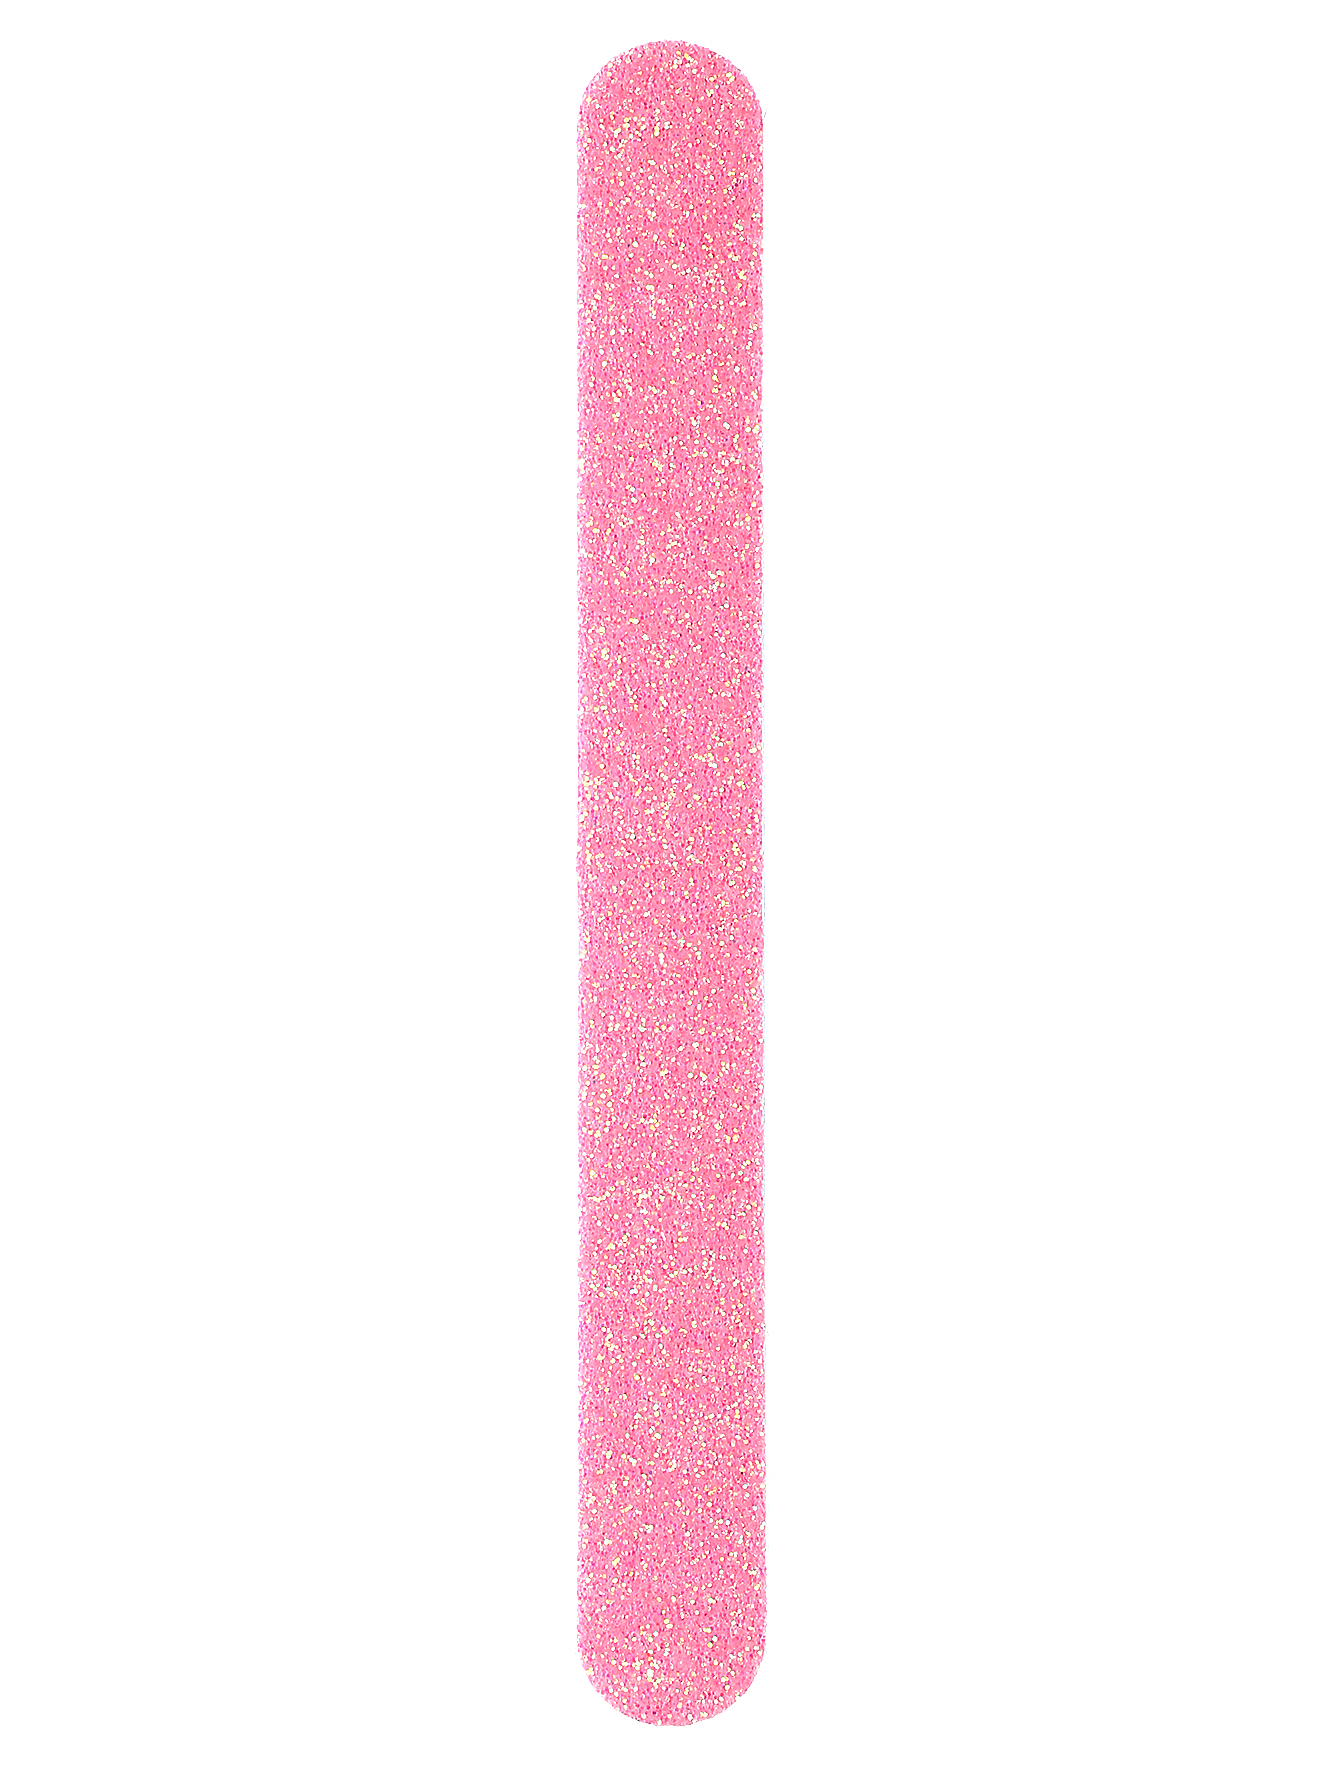  Пилка для ногтей светло-розовая - Nail Care - Общий вид